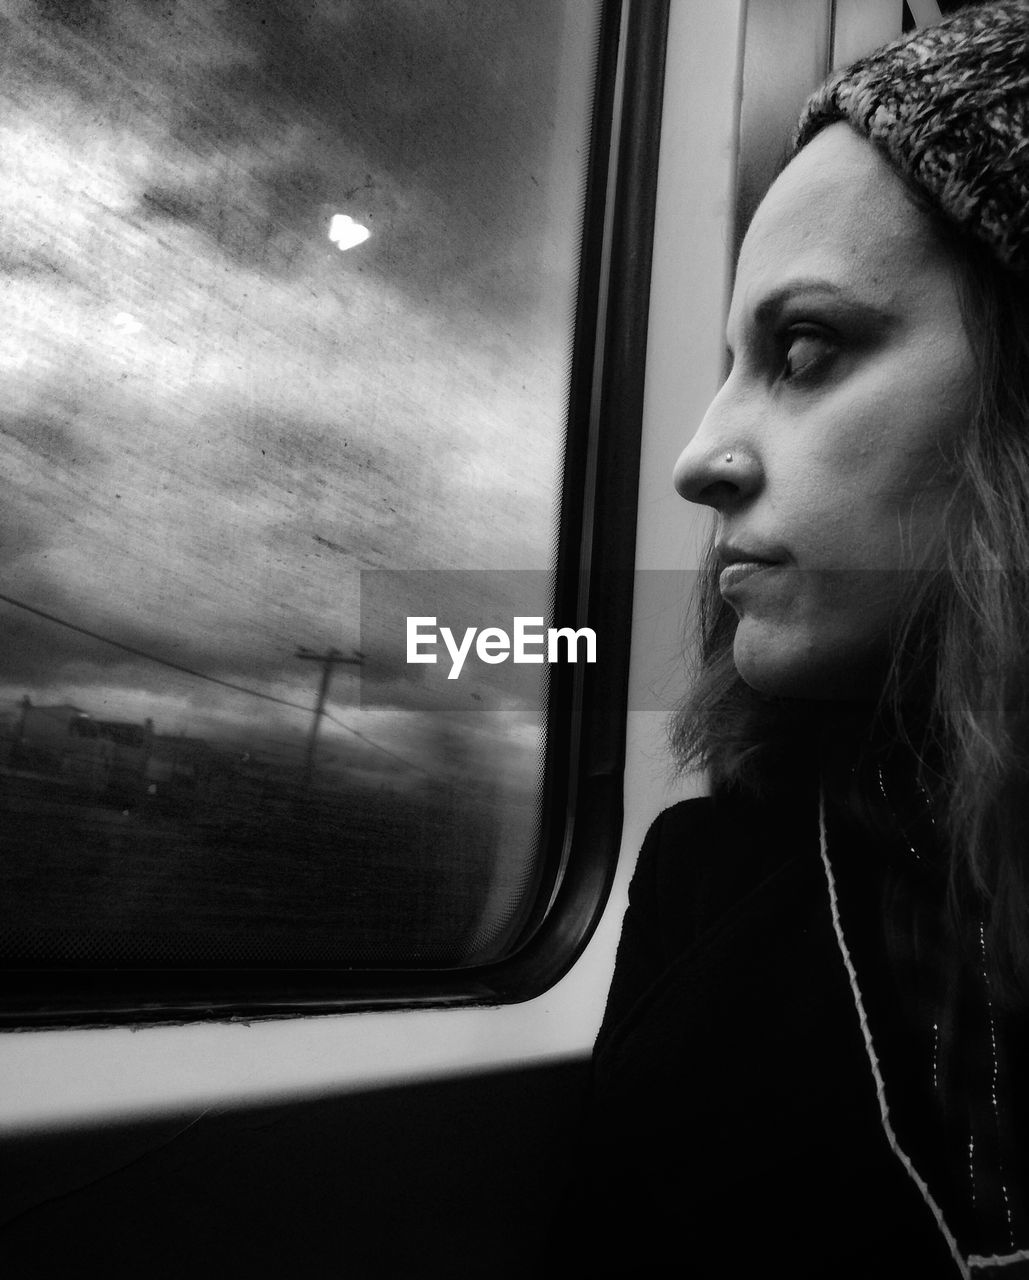 PORTRAIT OF WOMAN LOOKING AT TRAIN WINDOW